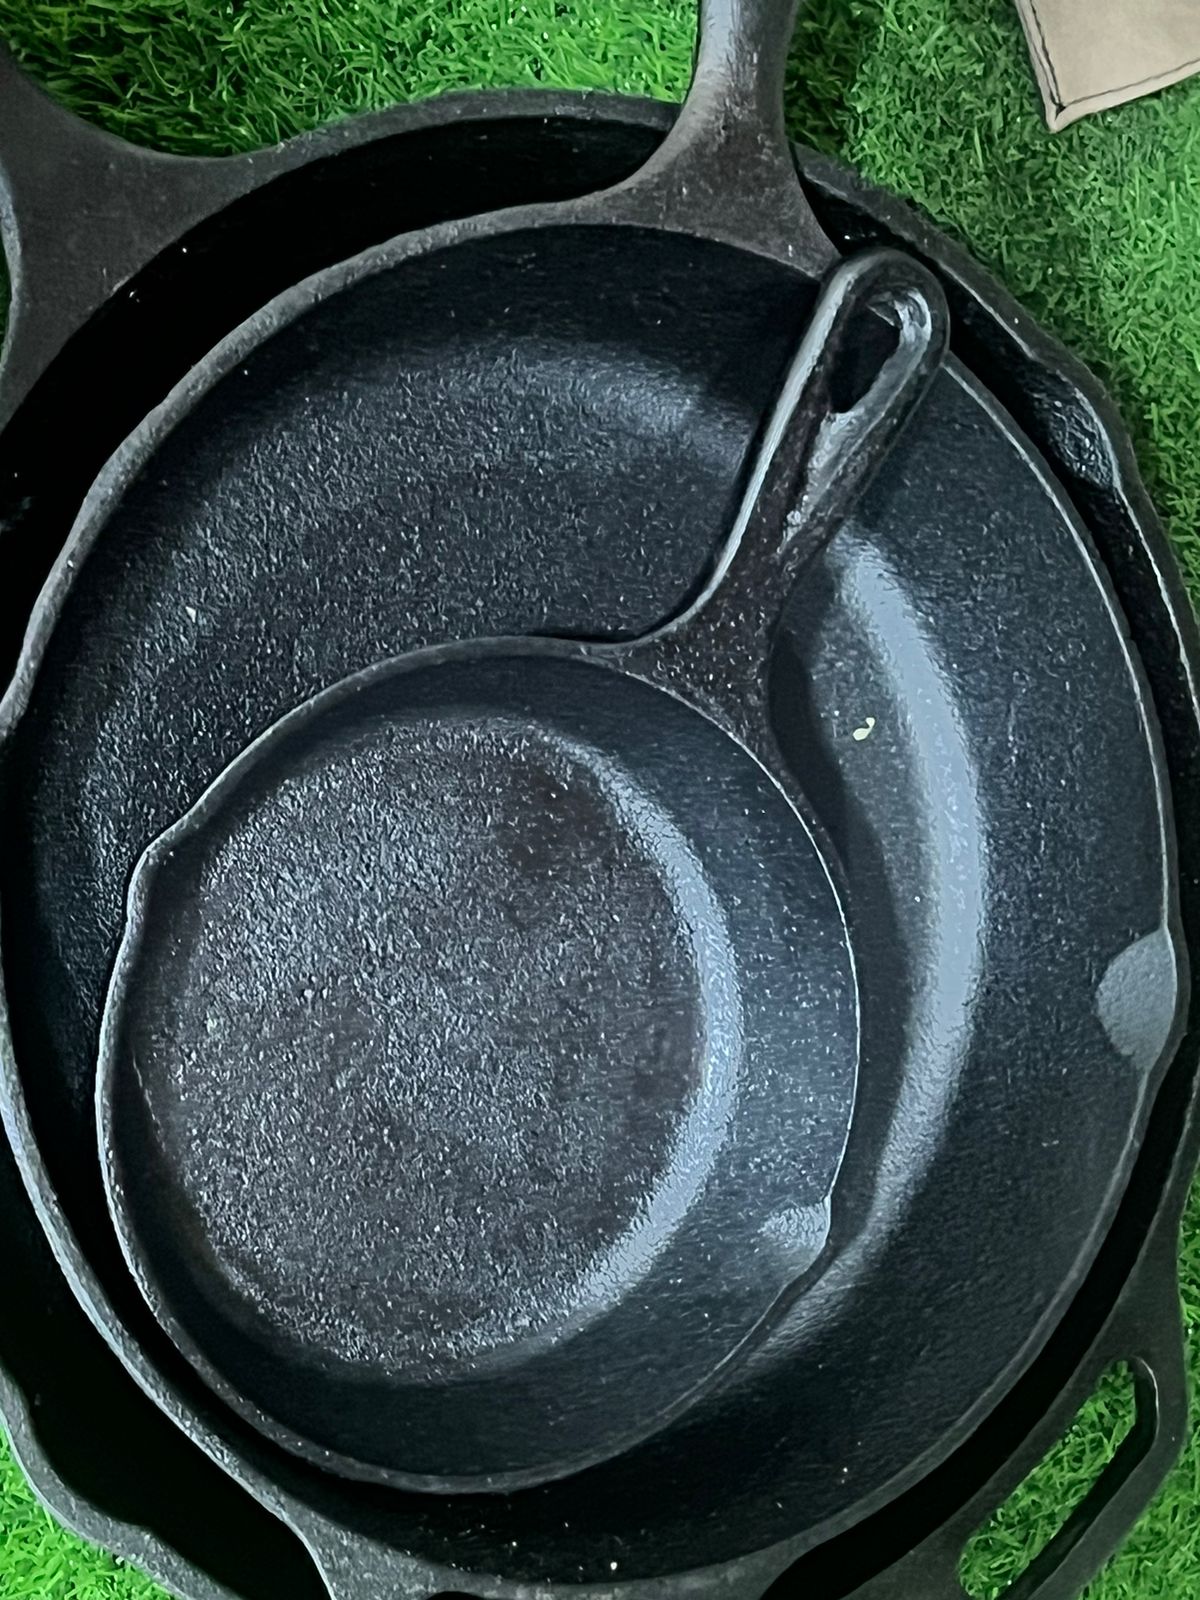 Cast Iron Skillet 6.25 Inch (16 CM) Naturally Non Stick, Seasoned. Krucible Kitchen, Frying Pan